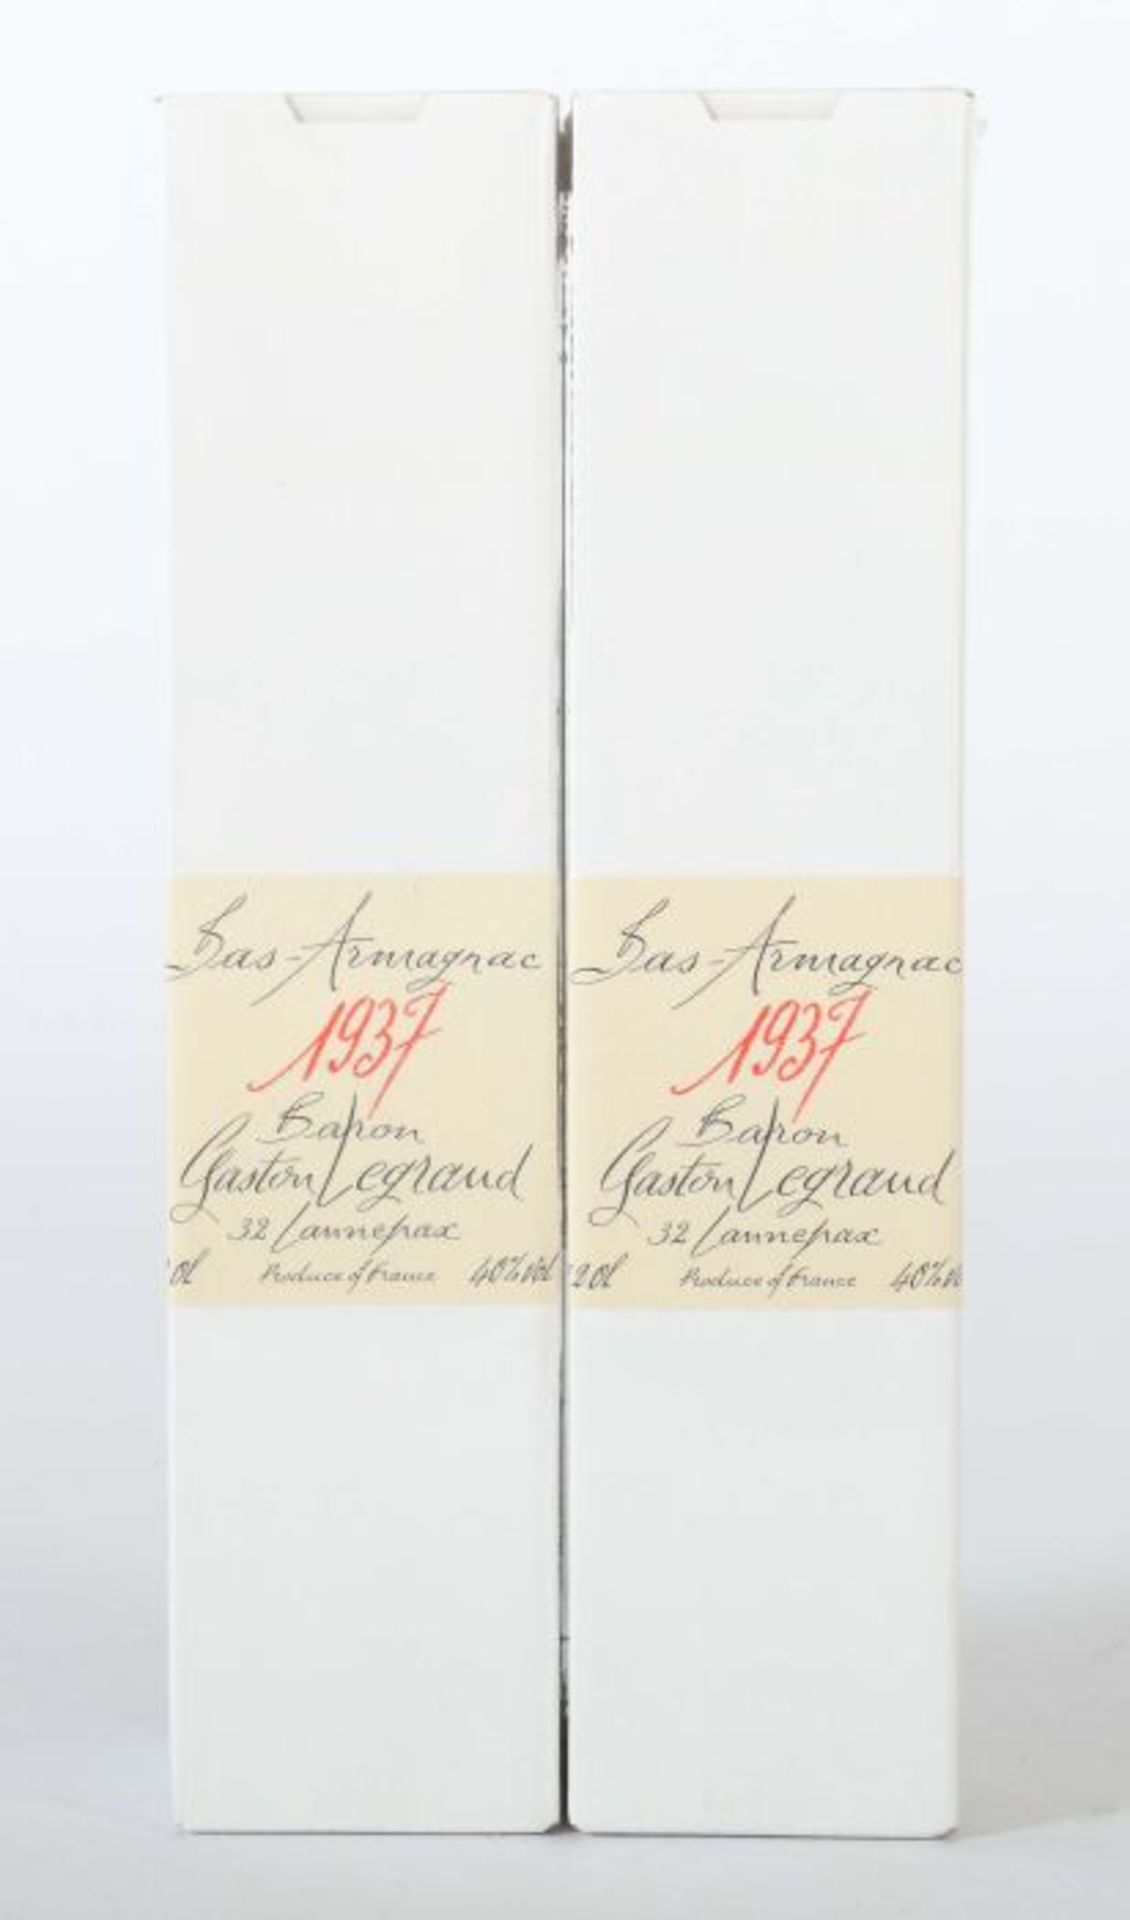 2 Flaschen Armagnac Baron Gaston Legrand Bas Armagnac, 1937er JG, je 40% vol., 0,2 l. In